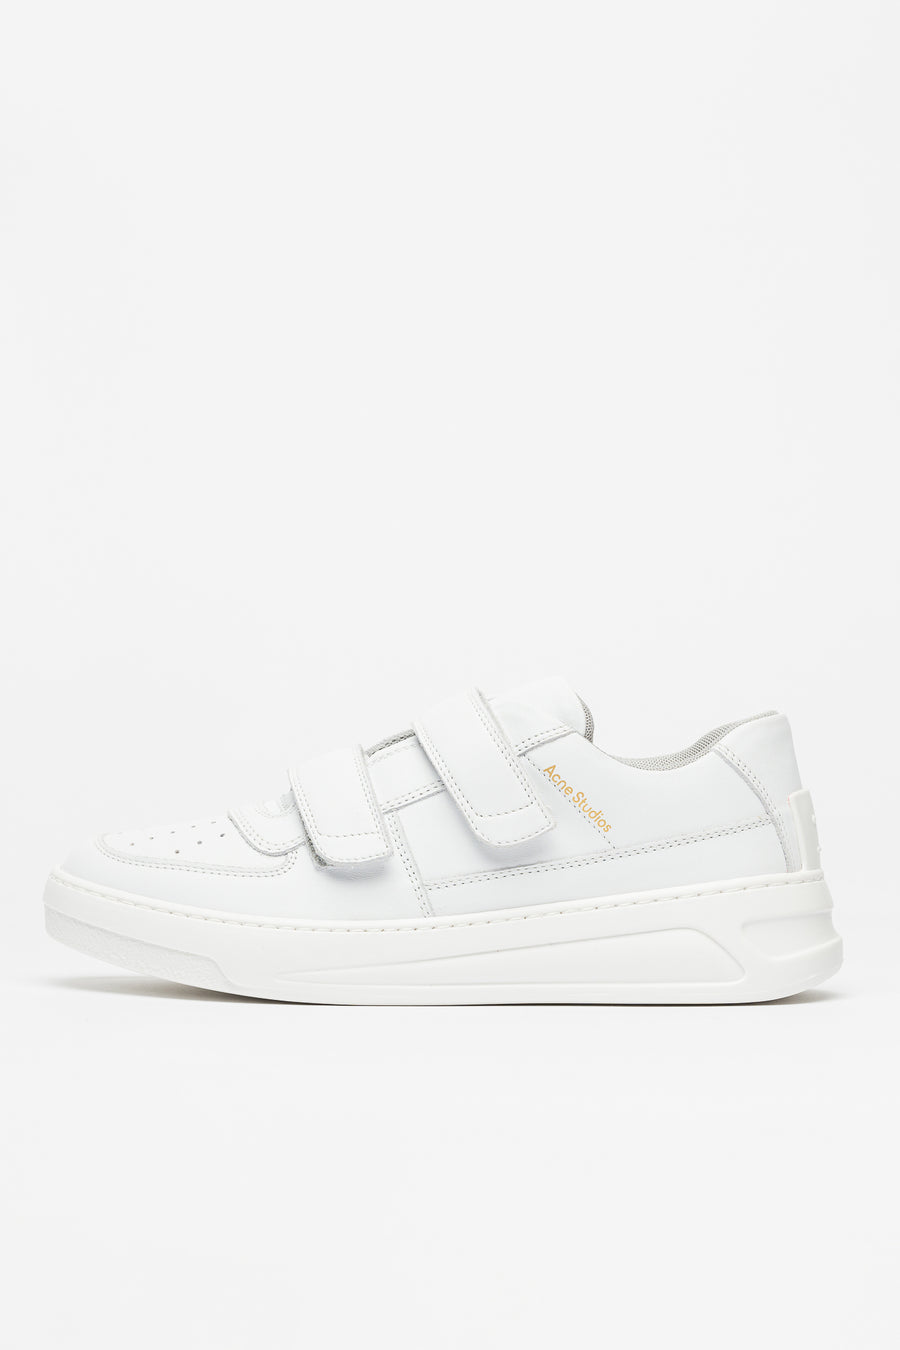 W Velcro Strap Sneaker in White/Optic White